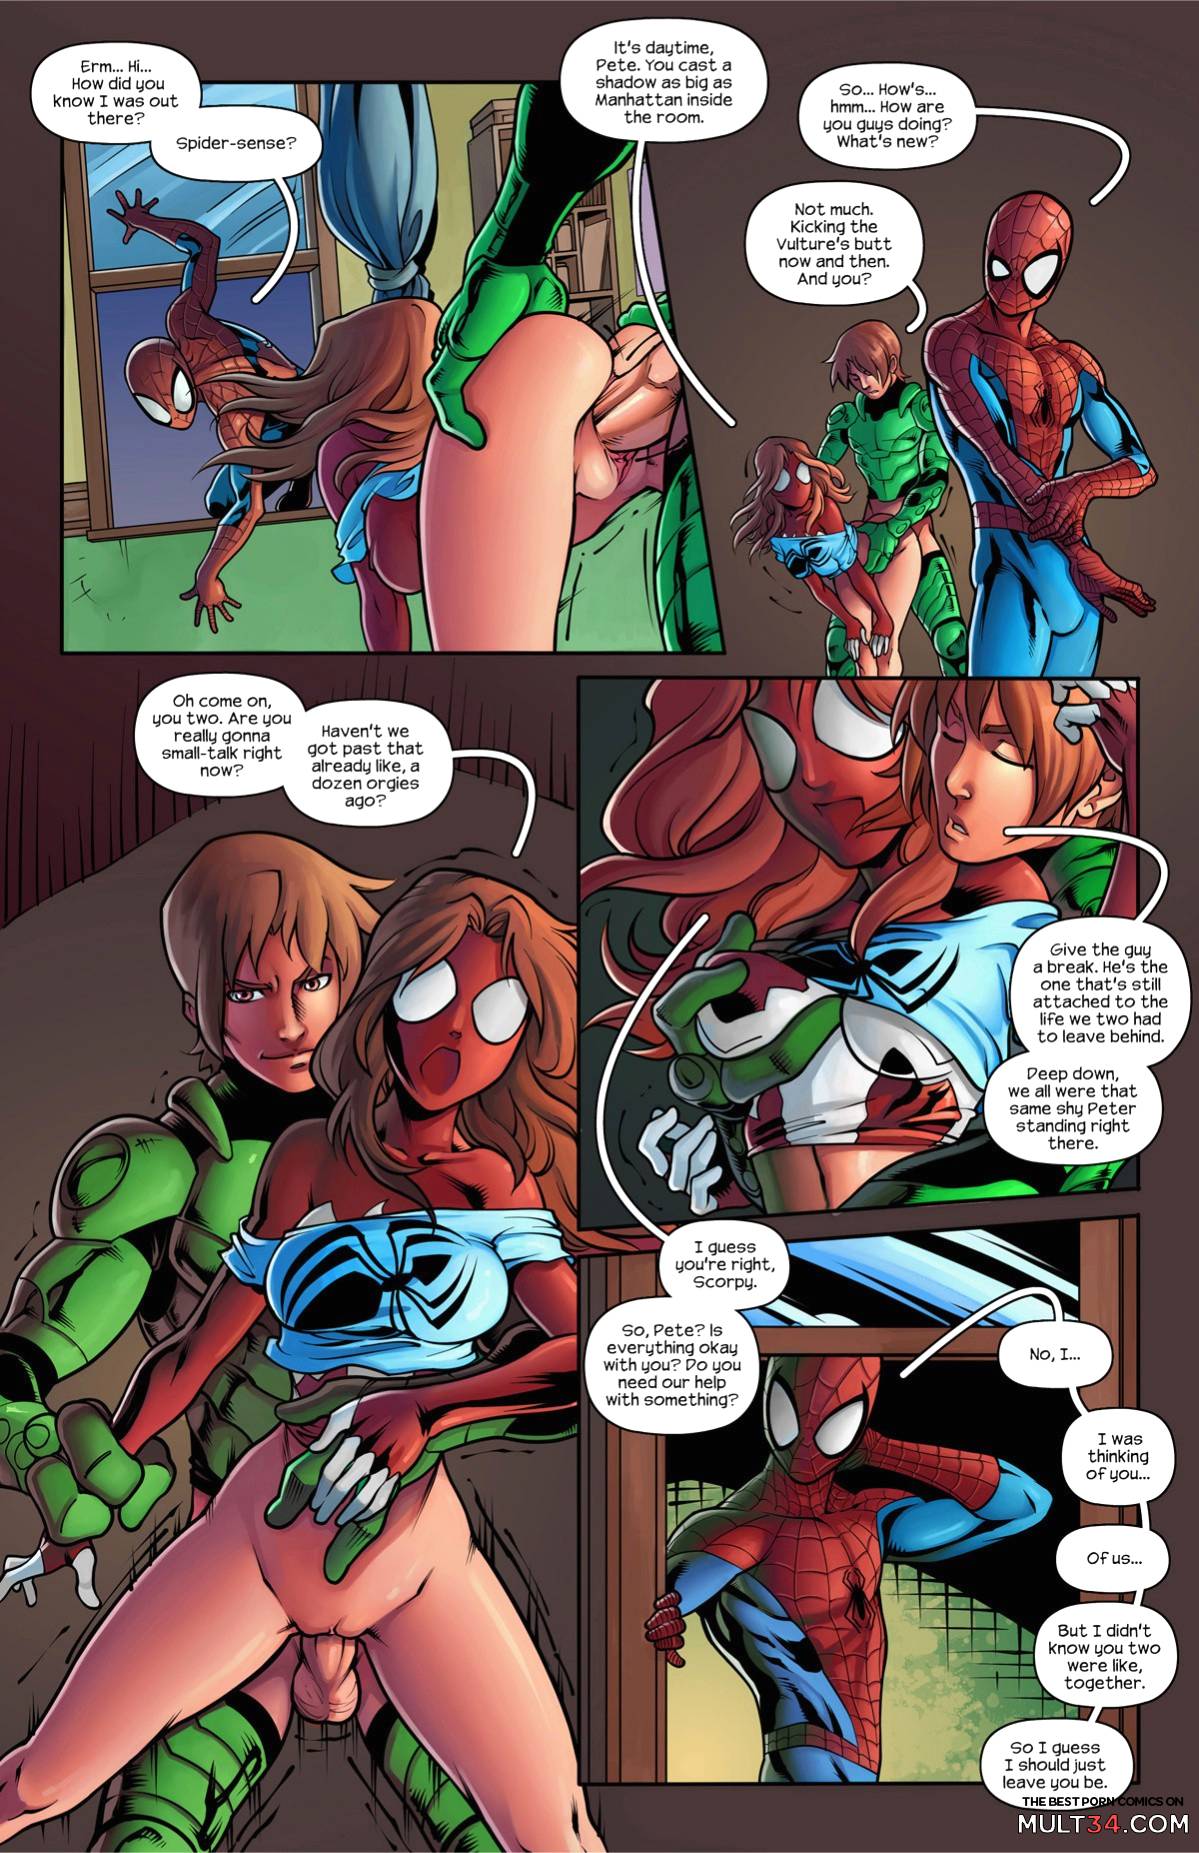 Sex Ultimate Spider Man - Ultimate Spider-Man XXX 11 - Spidercest porn comic - the best cartoon porn  comics, Rule 34 | MULT34